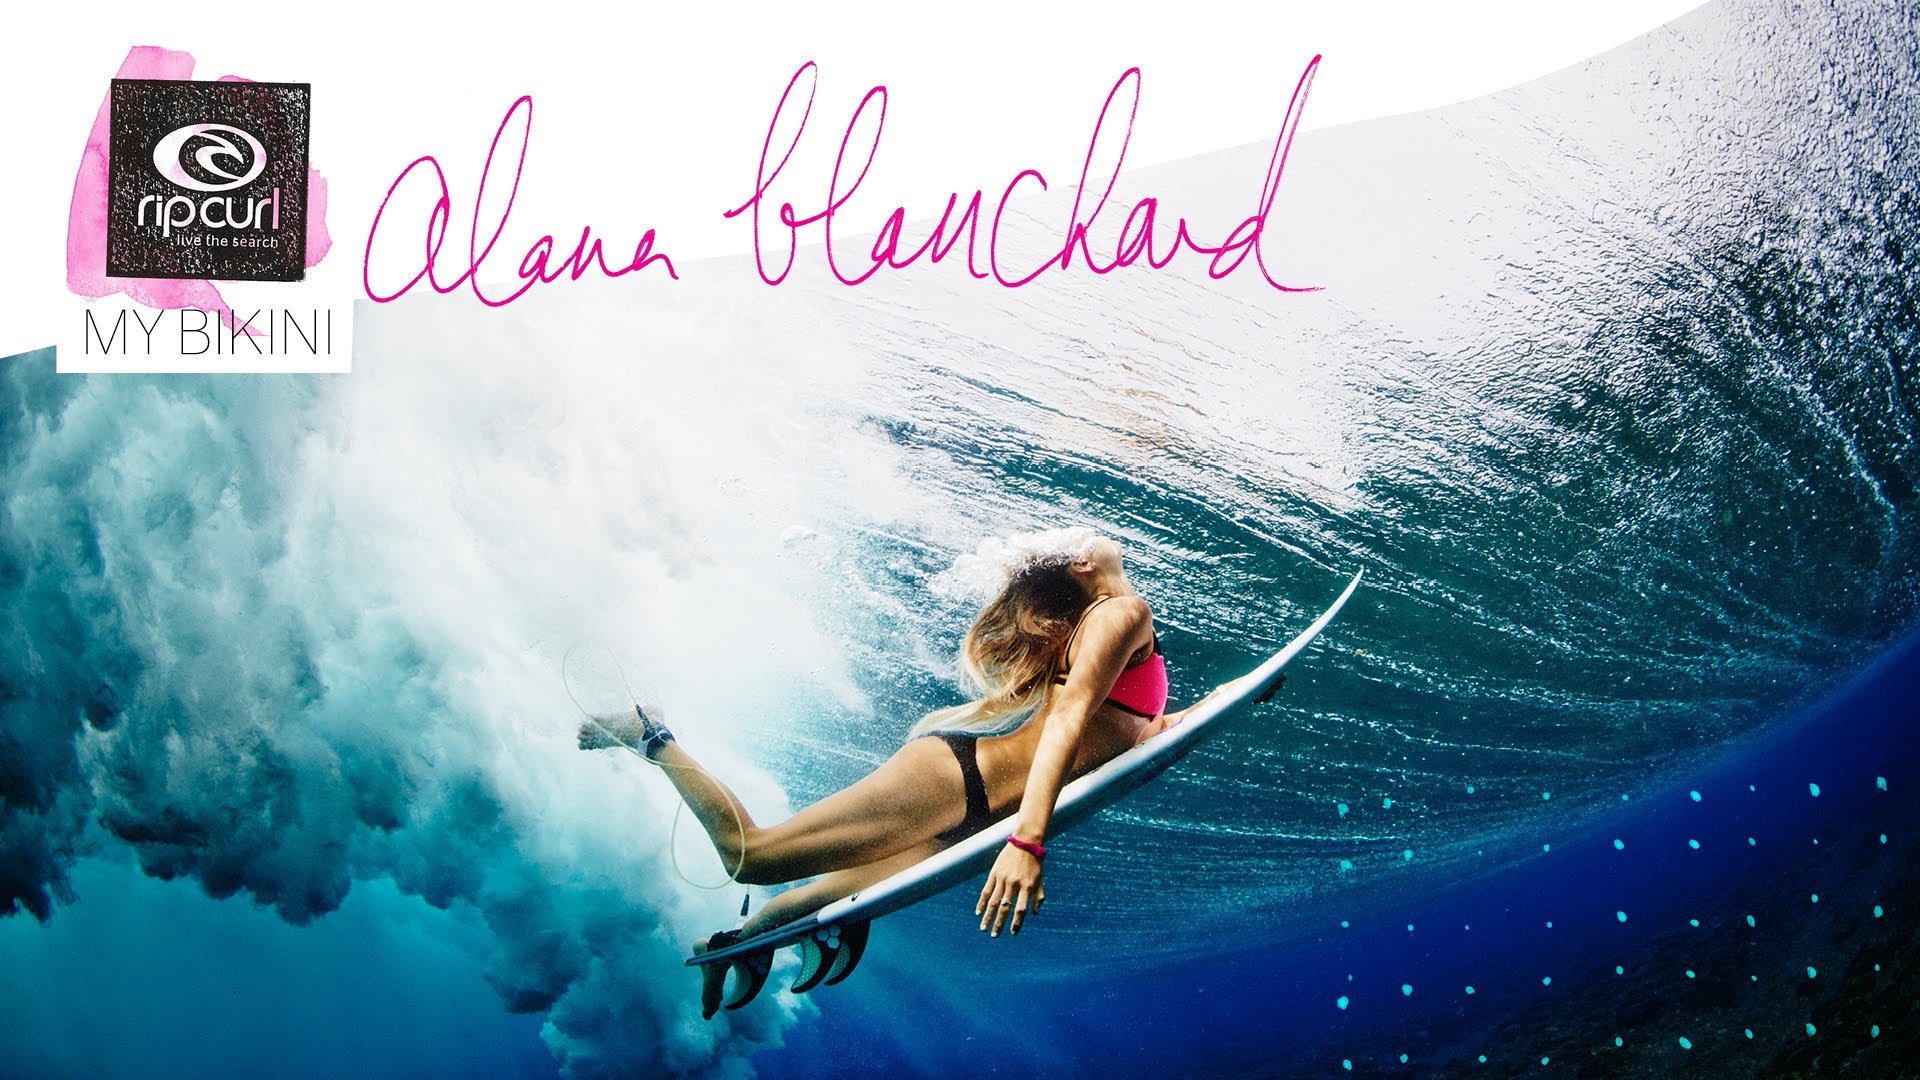 Alana Blanchard Surfing And Jack Stone